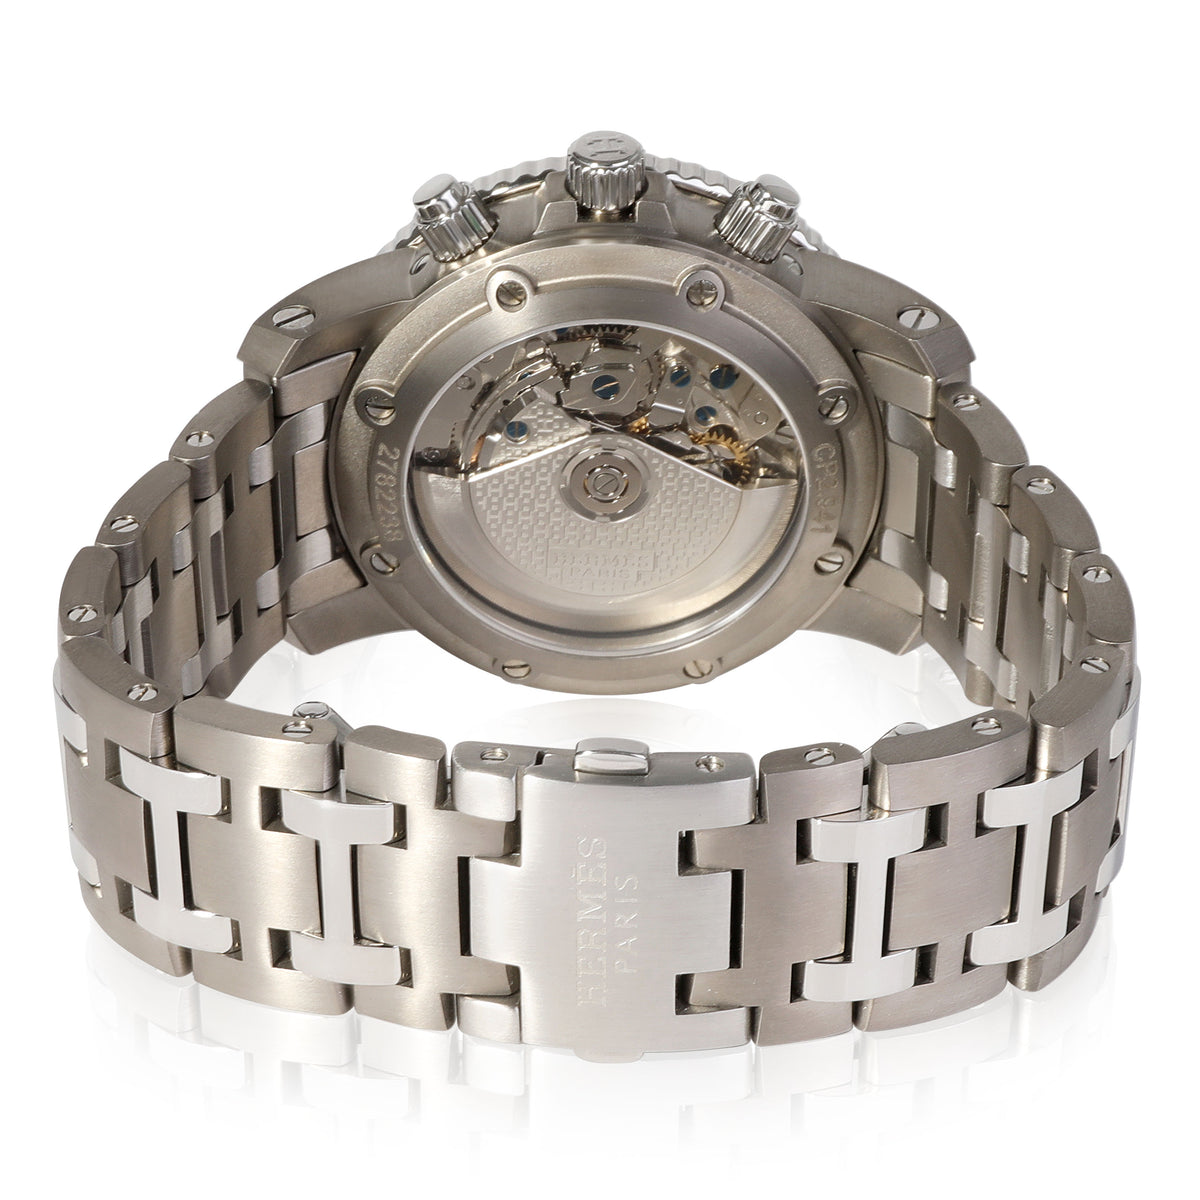 Hermès Clipper Chrono CP2.941.435.4963 Men's Watch in  SS/Titanium